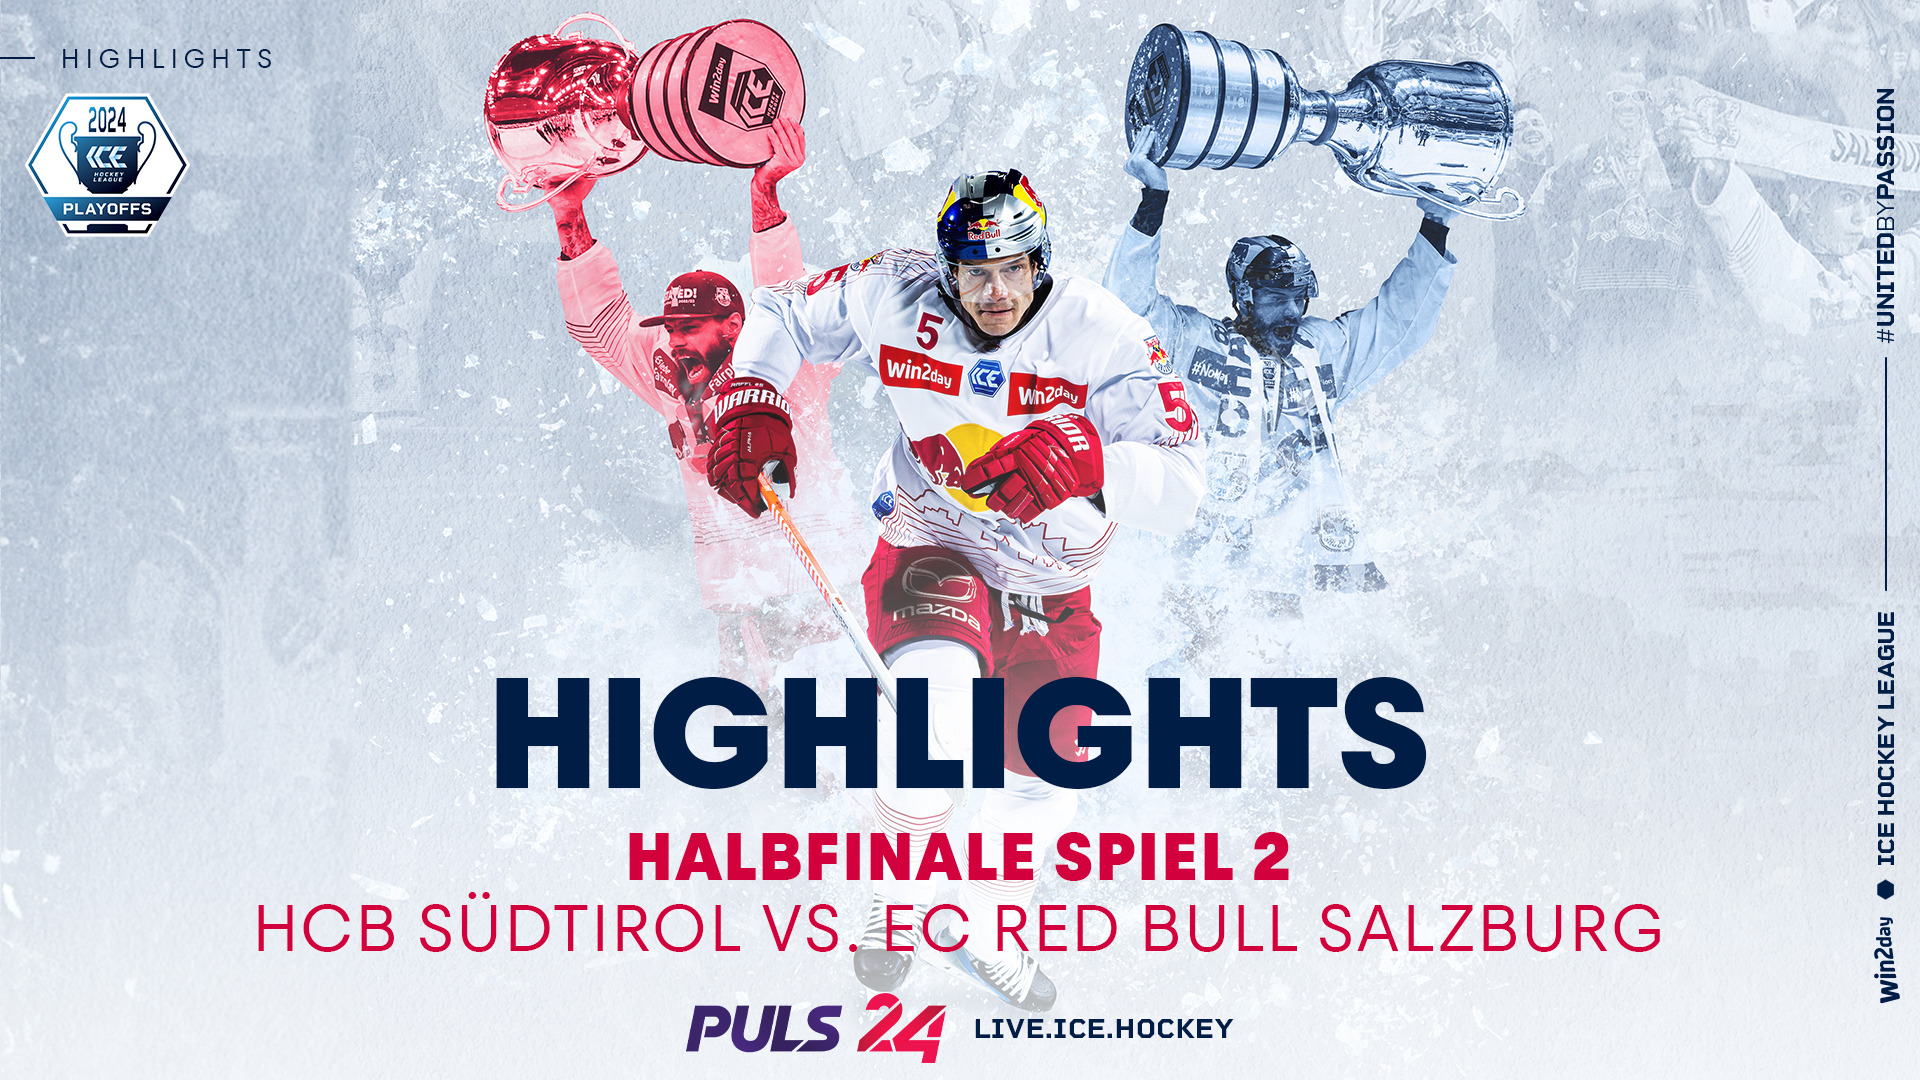 Highlights Halbfinale 2: HCB Südtirol vs. EC Red Bull Salzburg